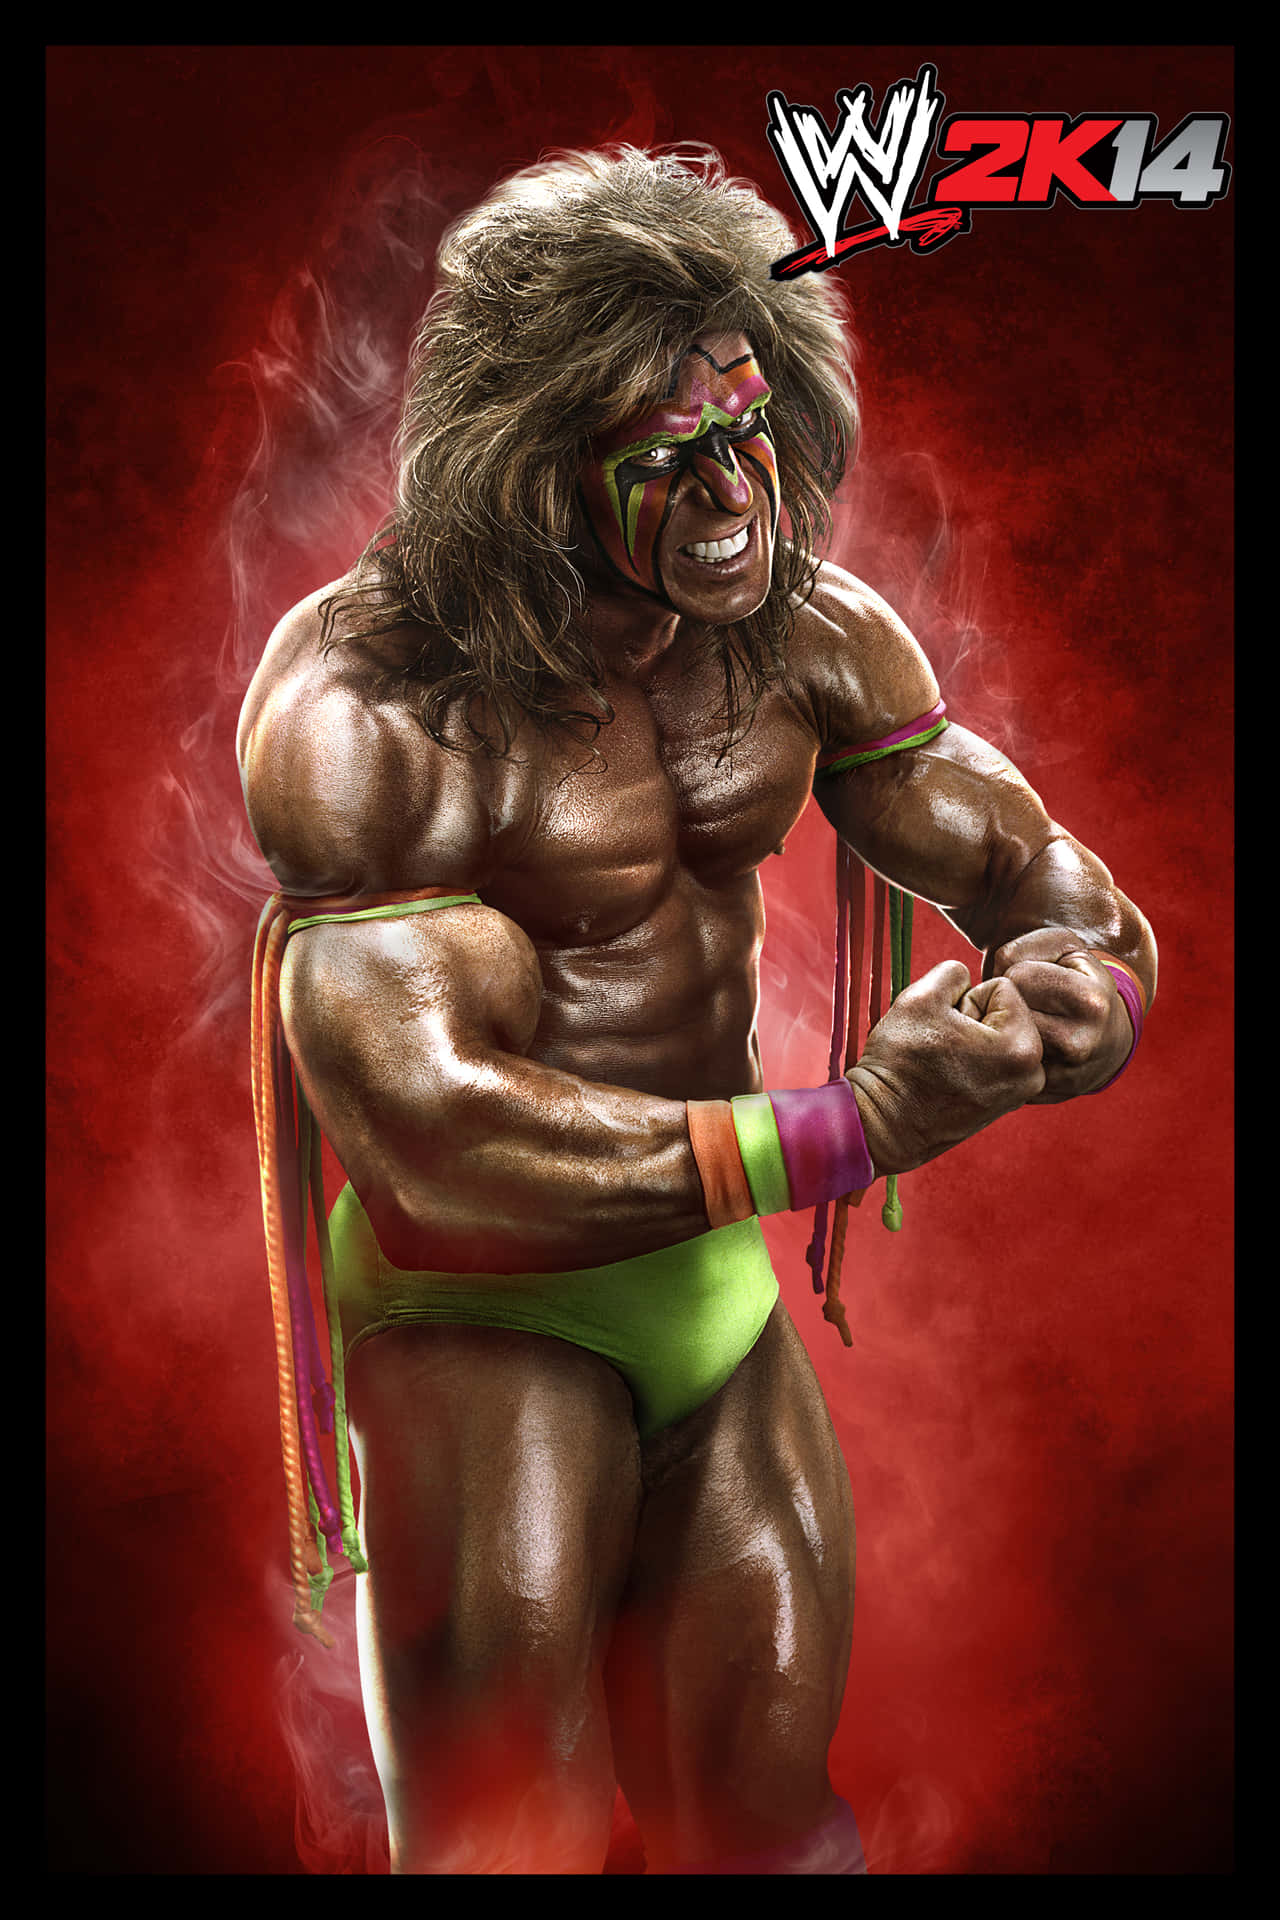 Wcw Champion Ultimate Warrior Wwe 2k14 Digital Artwork